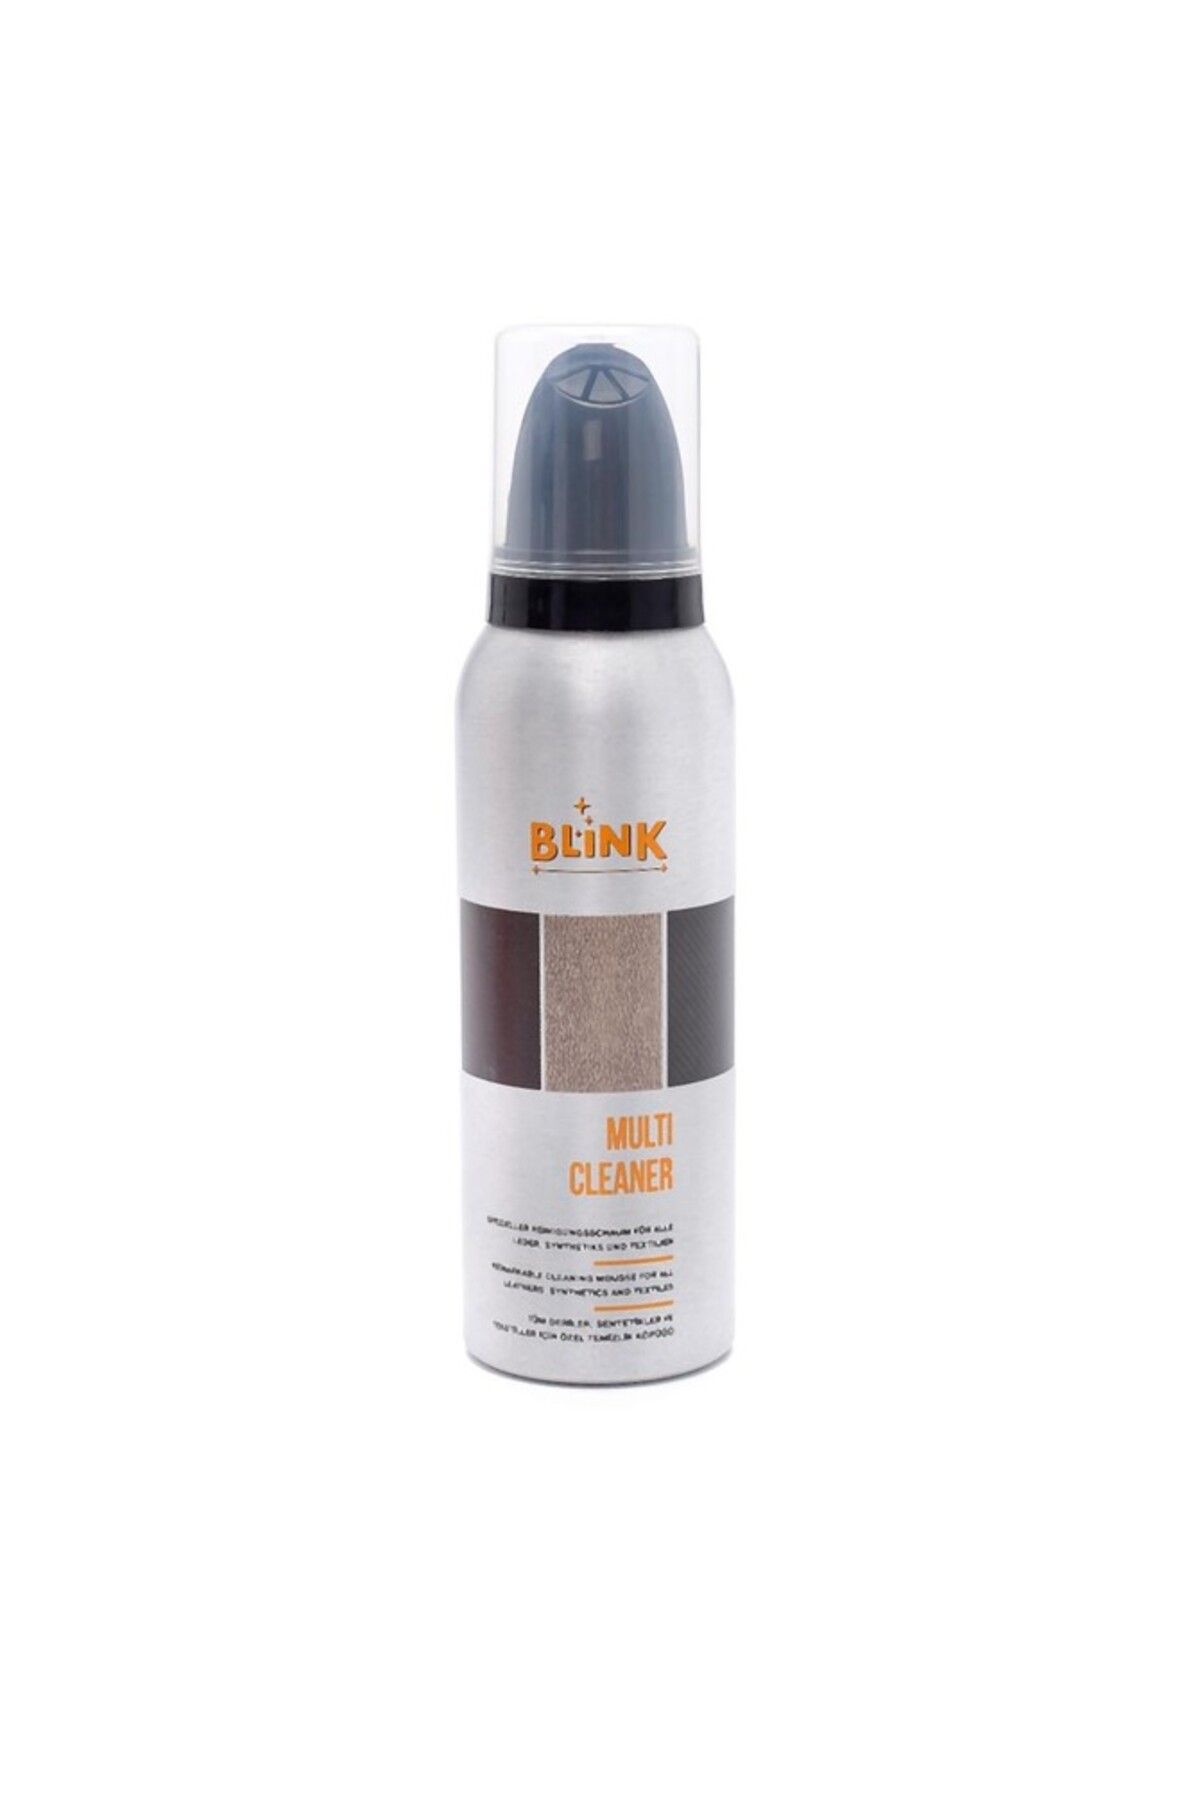 Blink Multi Cleaner Temizleme Köpüğü 000a2bm08373 000A2BM08373